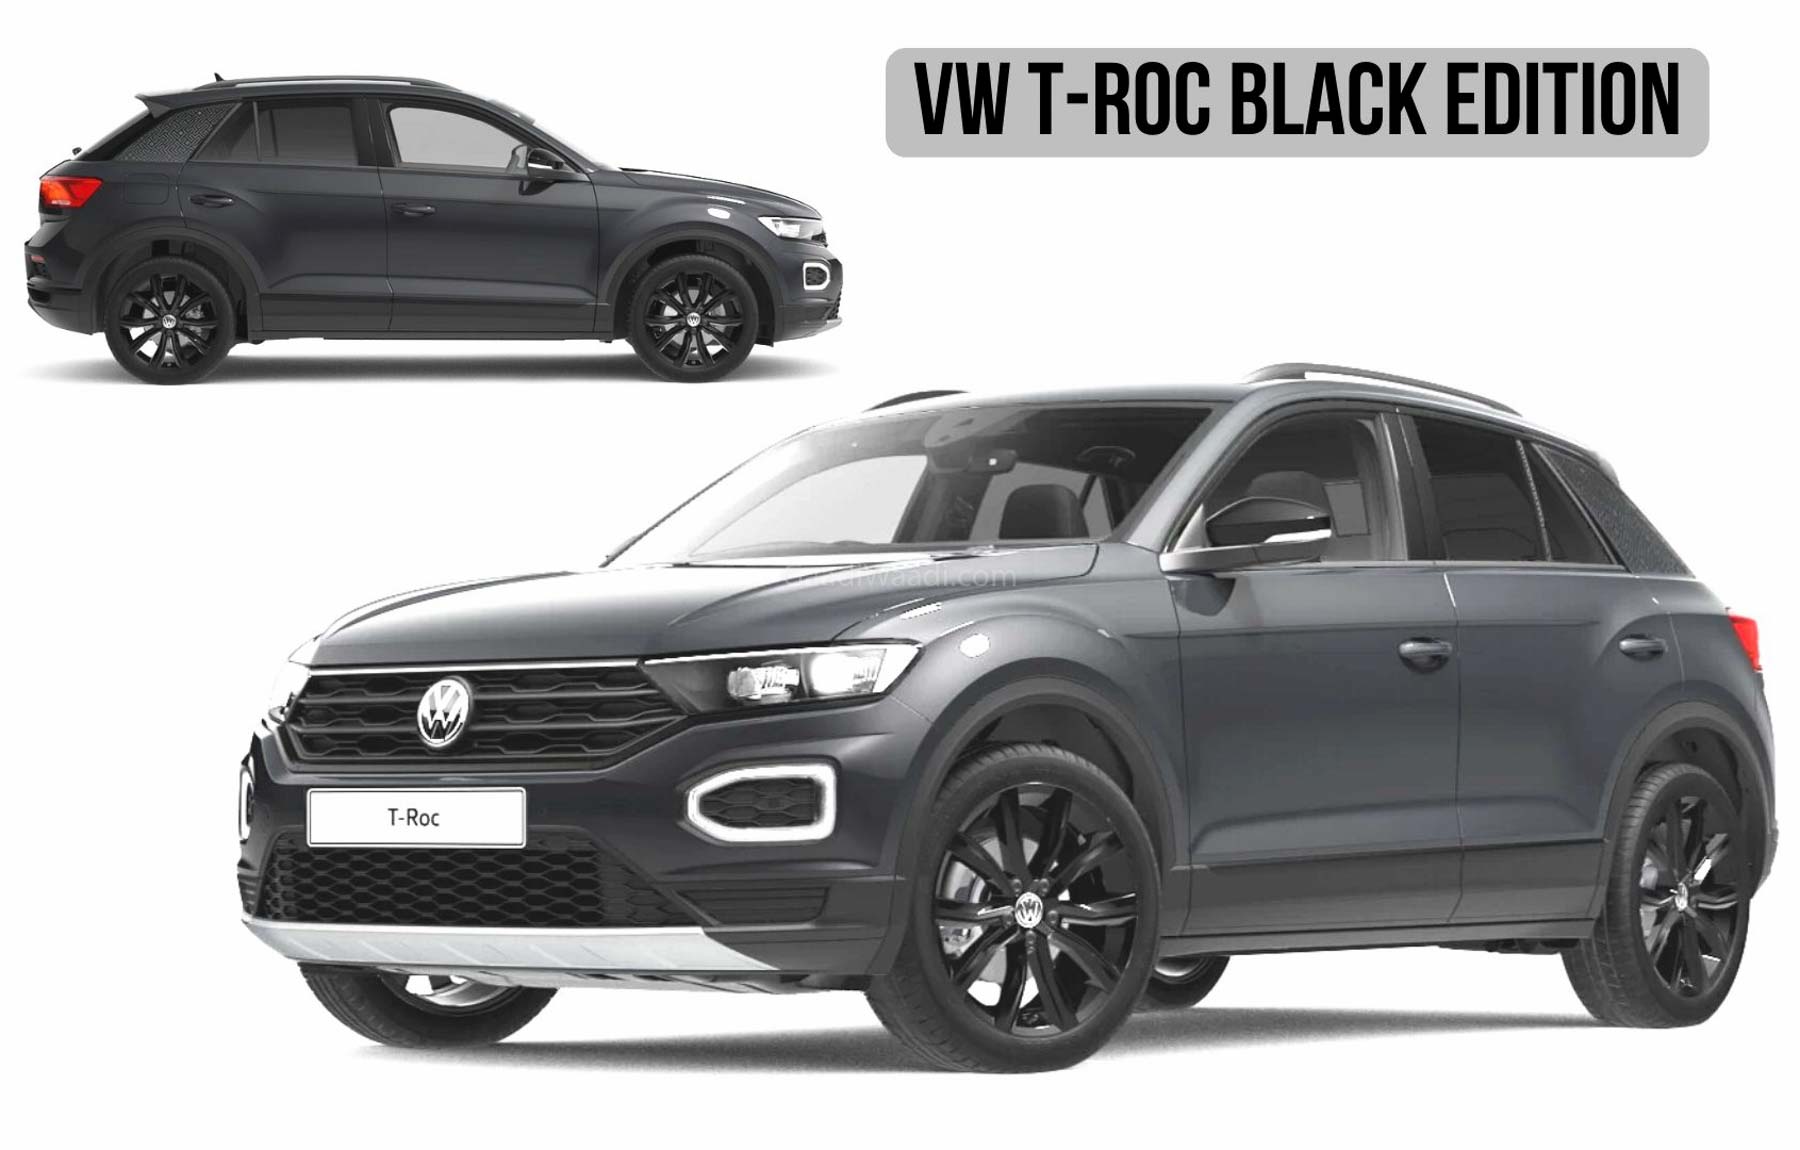 Volkswagen T-Roc Gets A Stylish Black Edition - Details